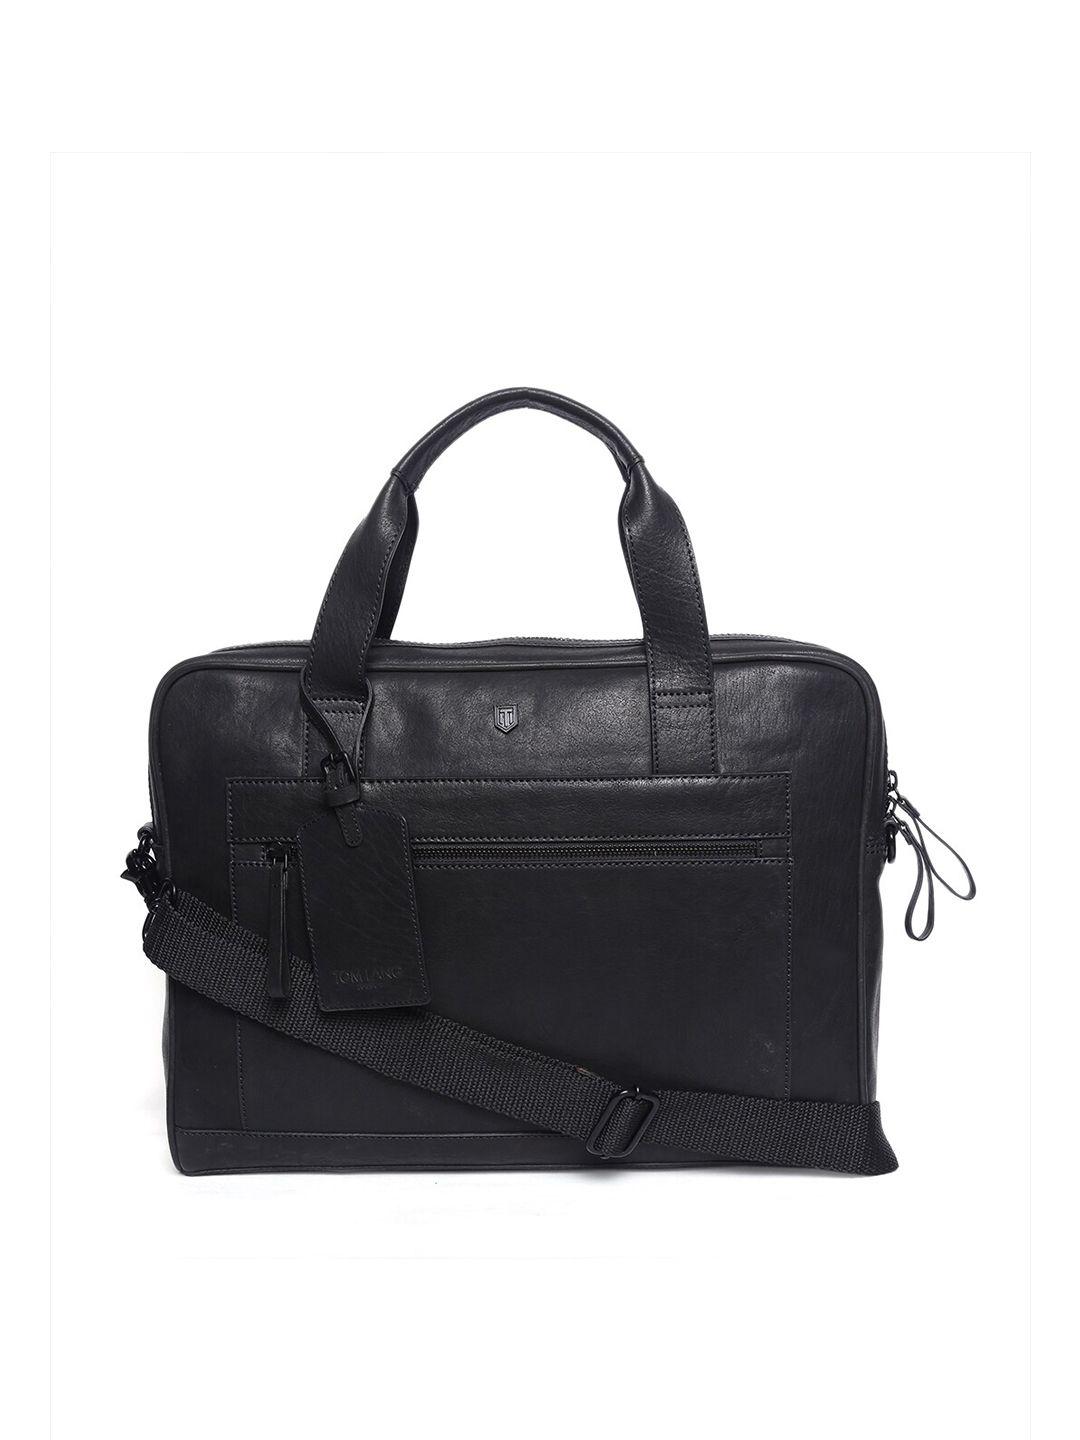 tom lang london unisex black leather laptop bag